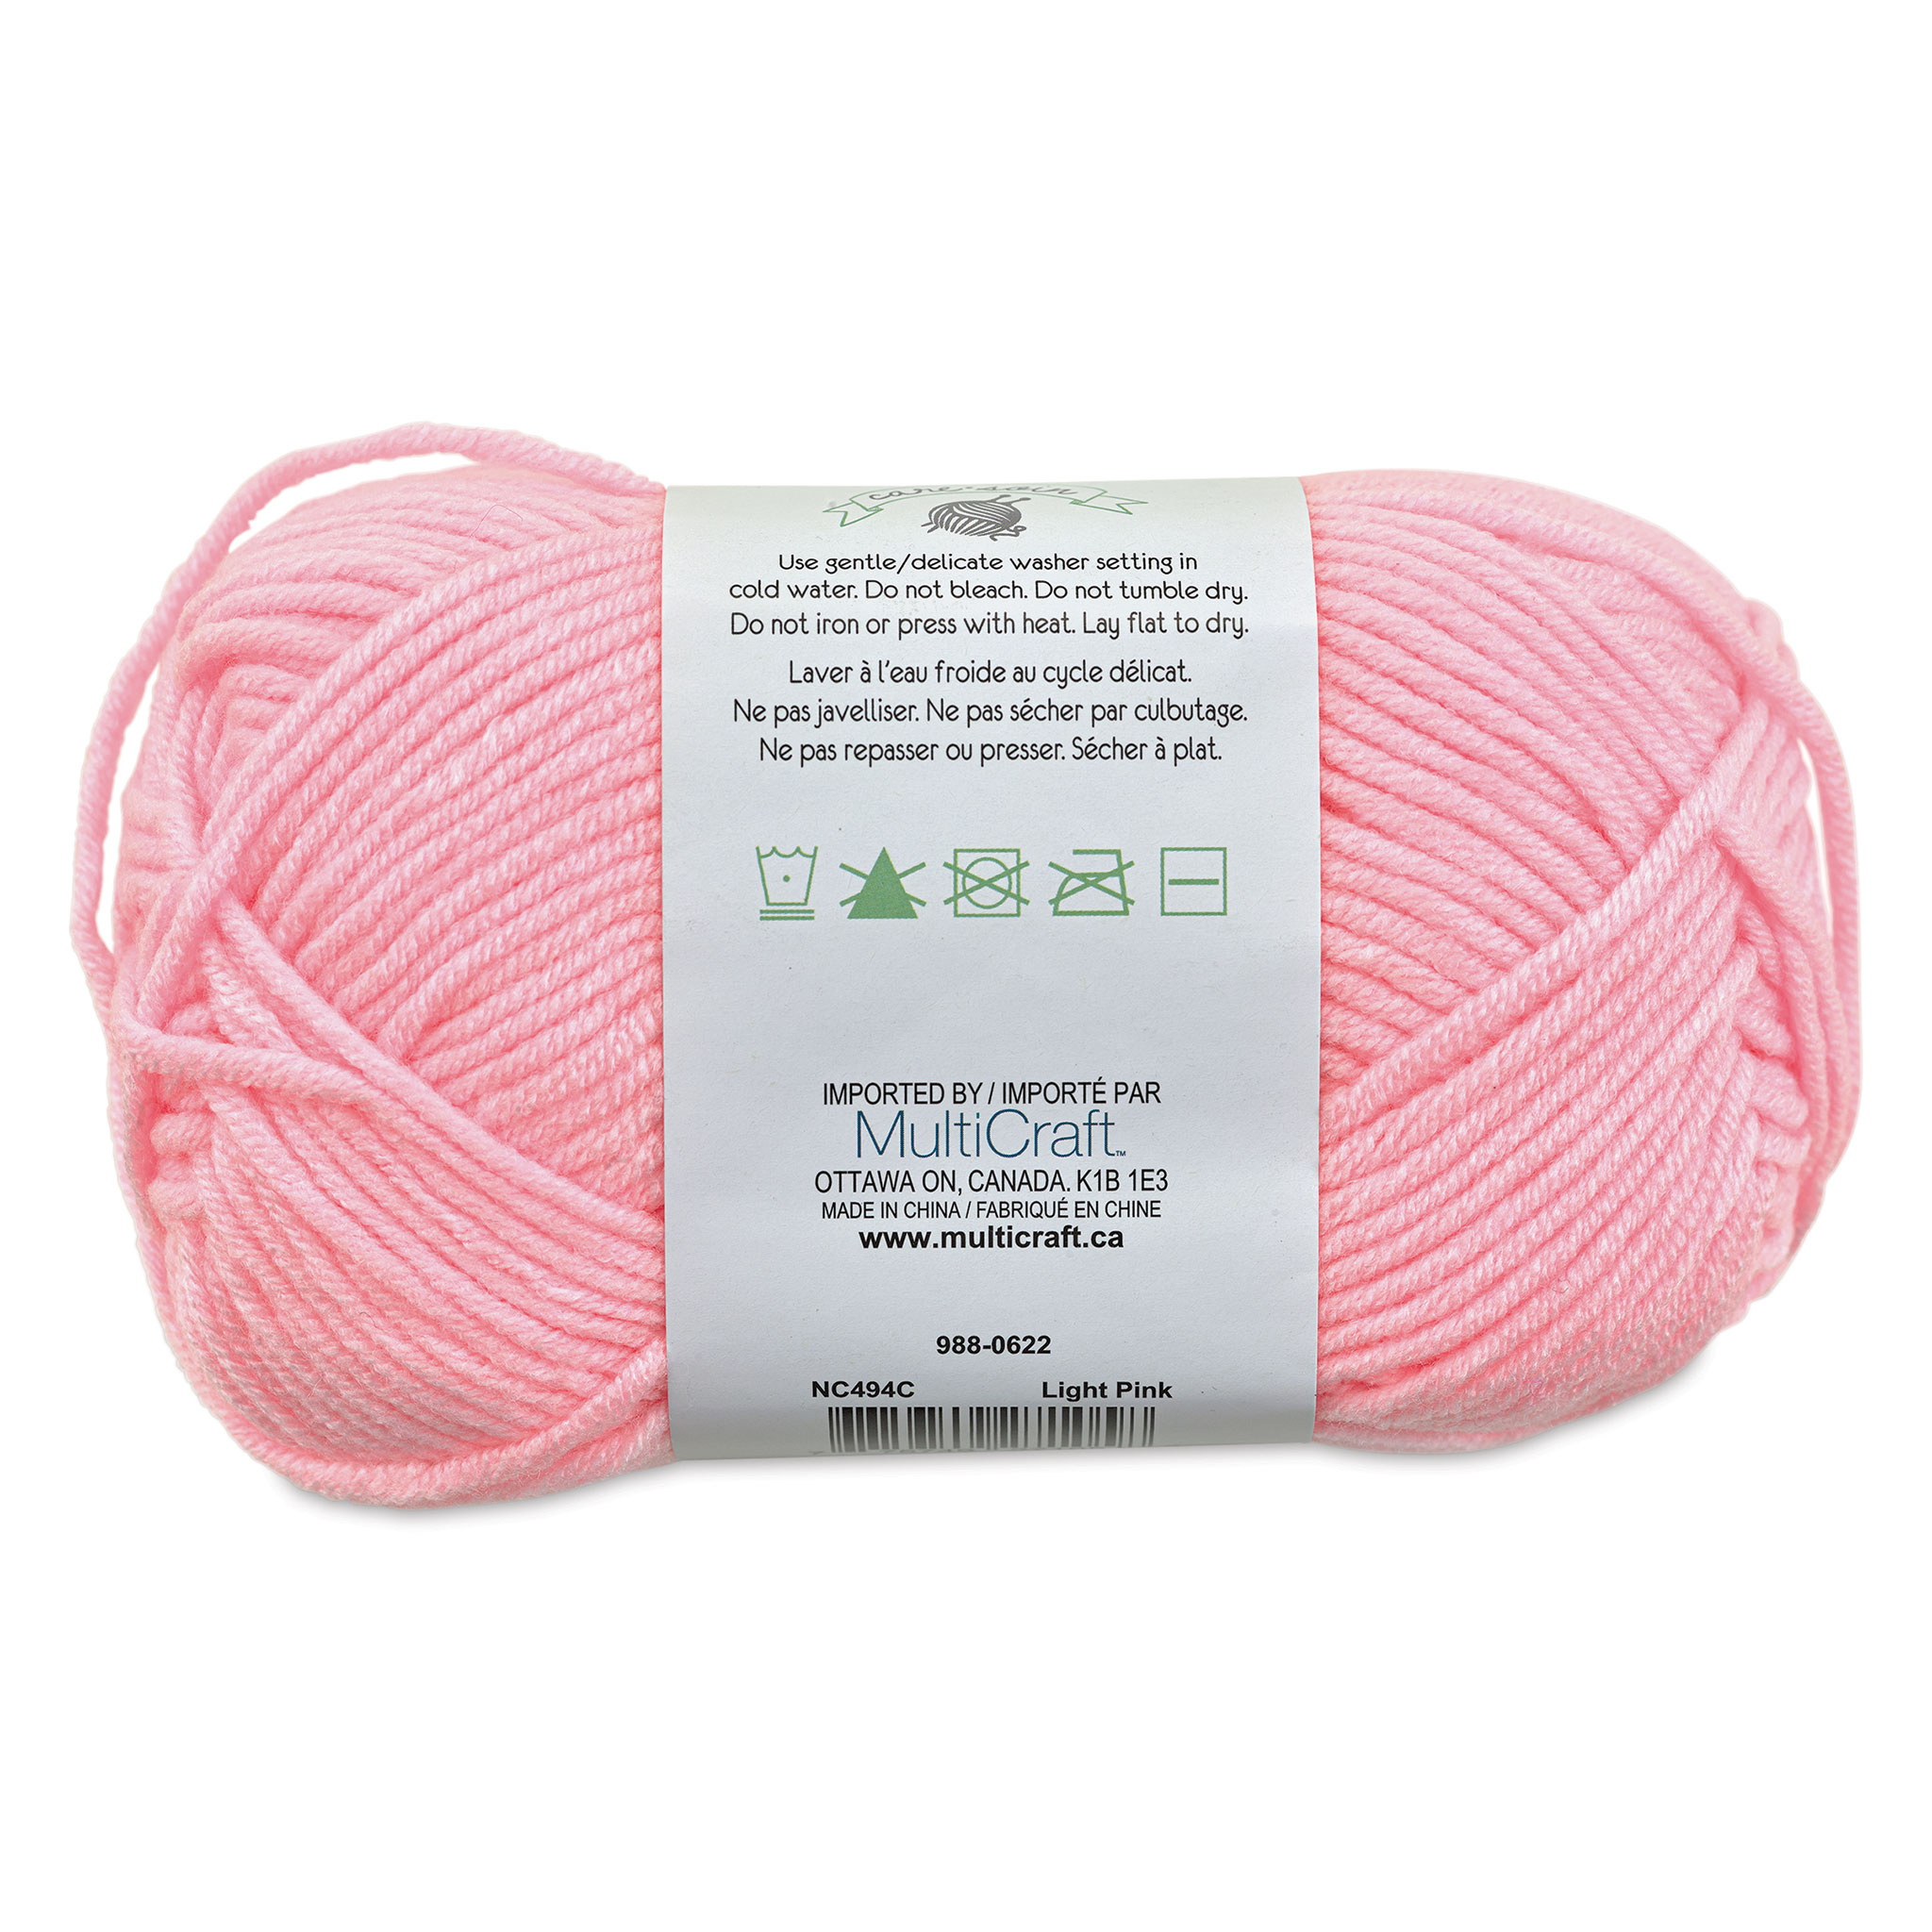 Needle Crafters Milk Cotton Yarn - Light Pink, 87 yds